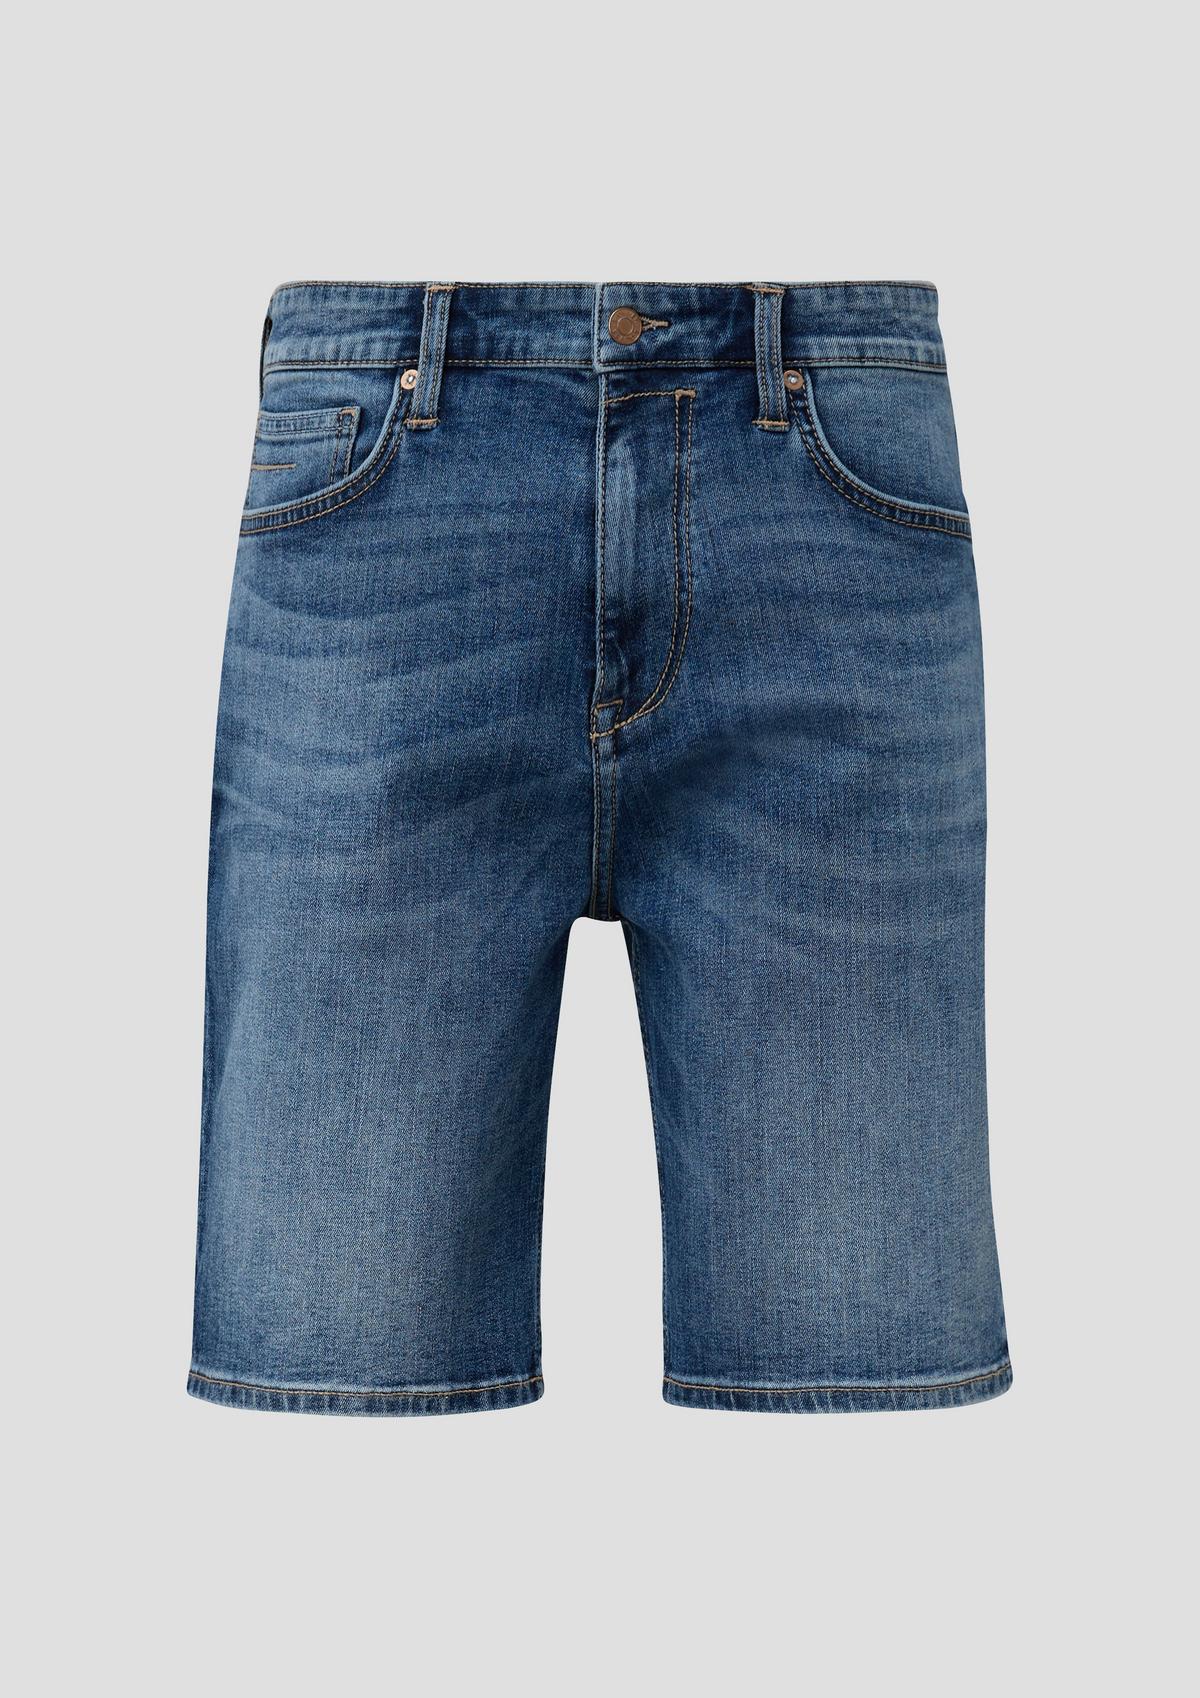 s.Oliver Short jeans / regular fit / mid rise / straight leg